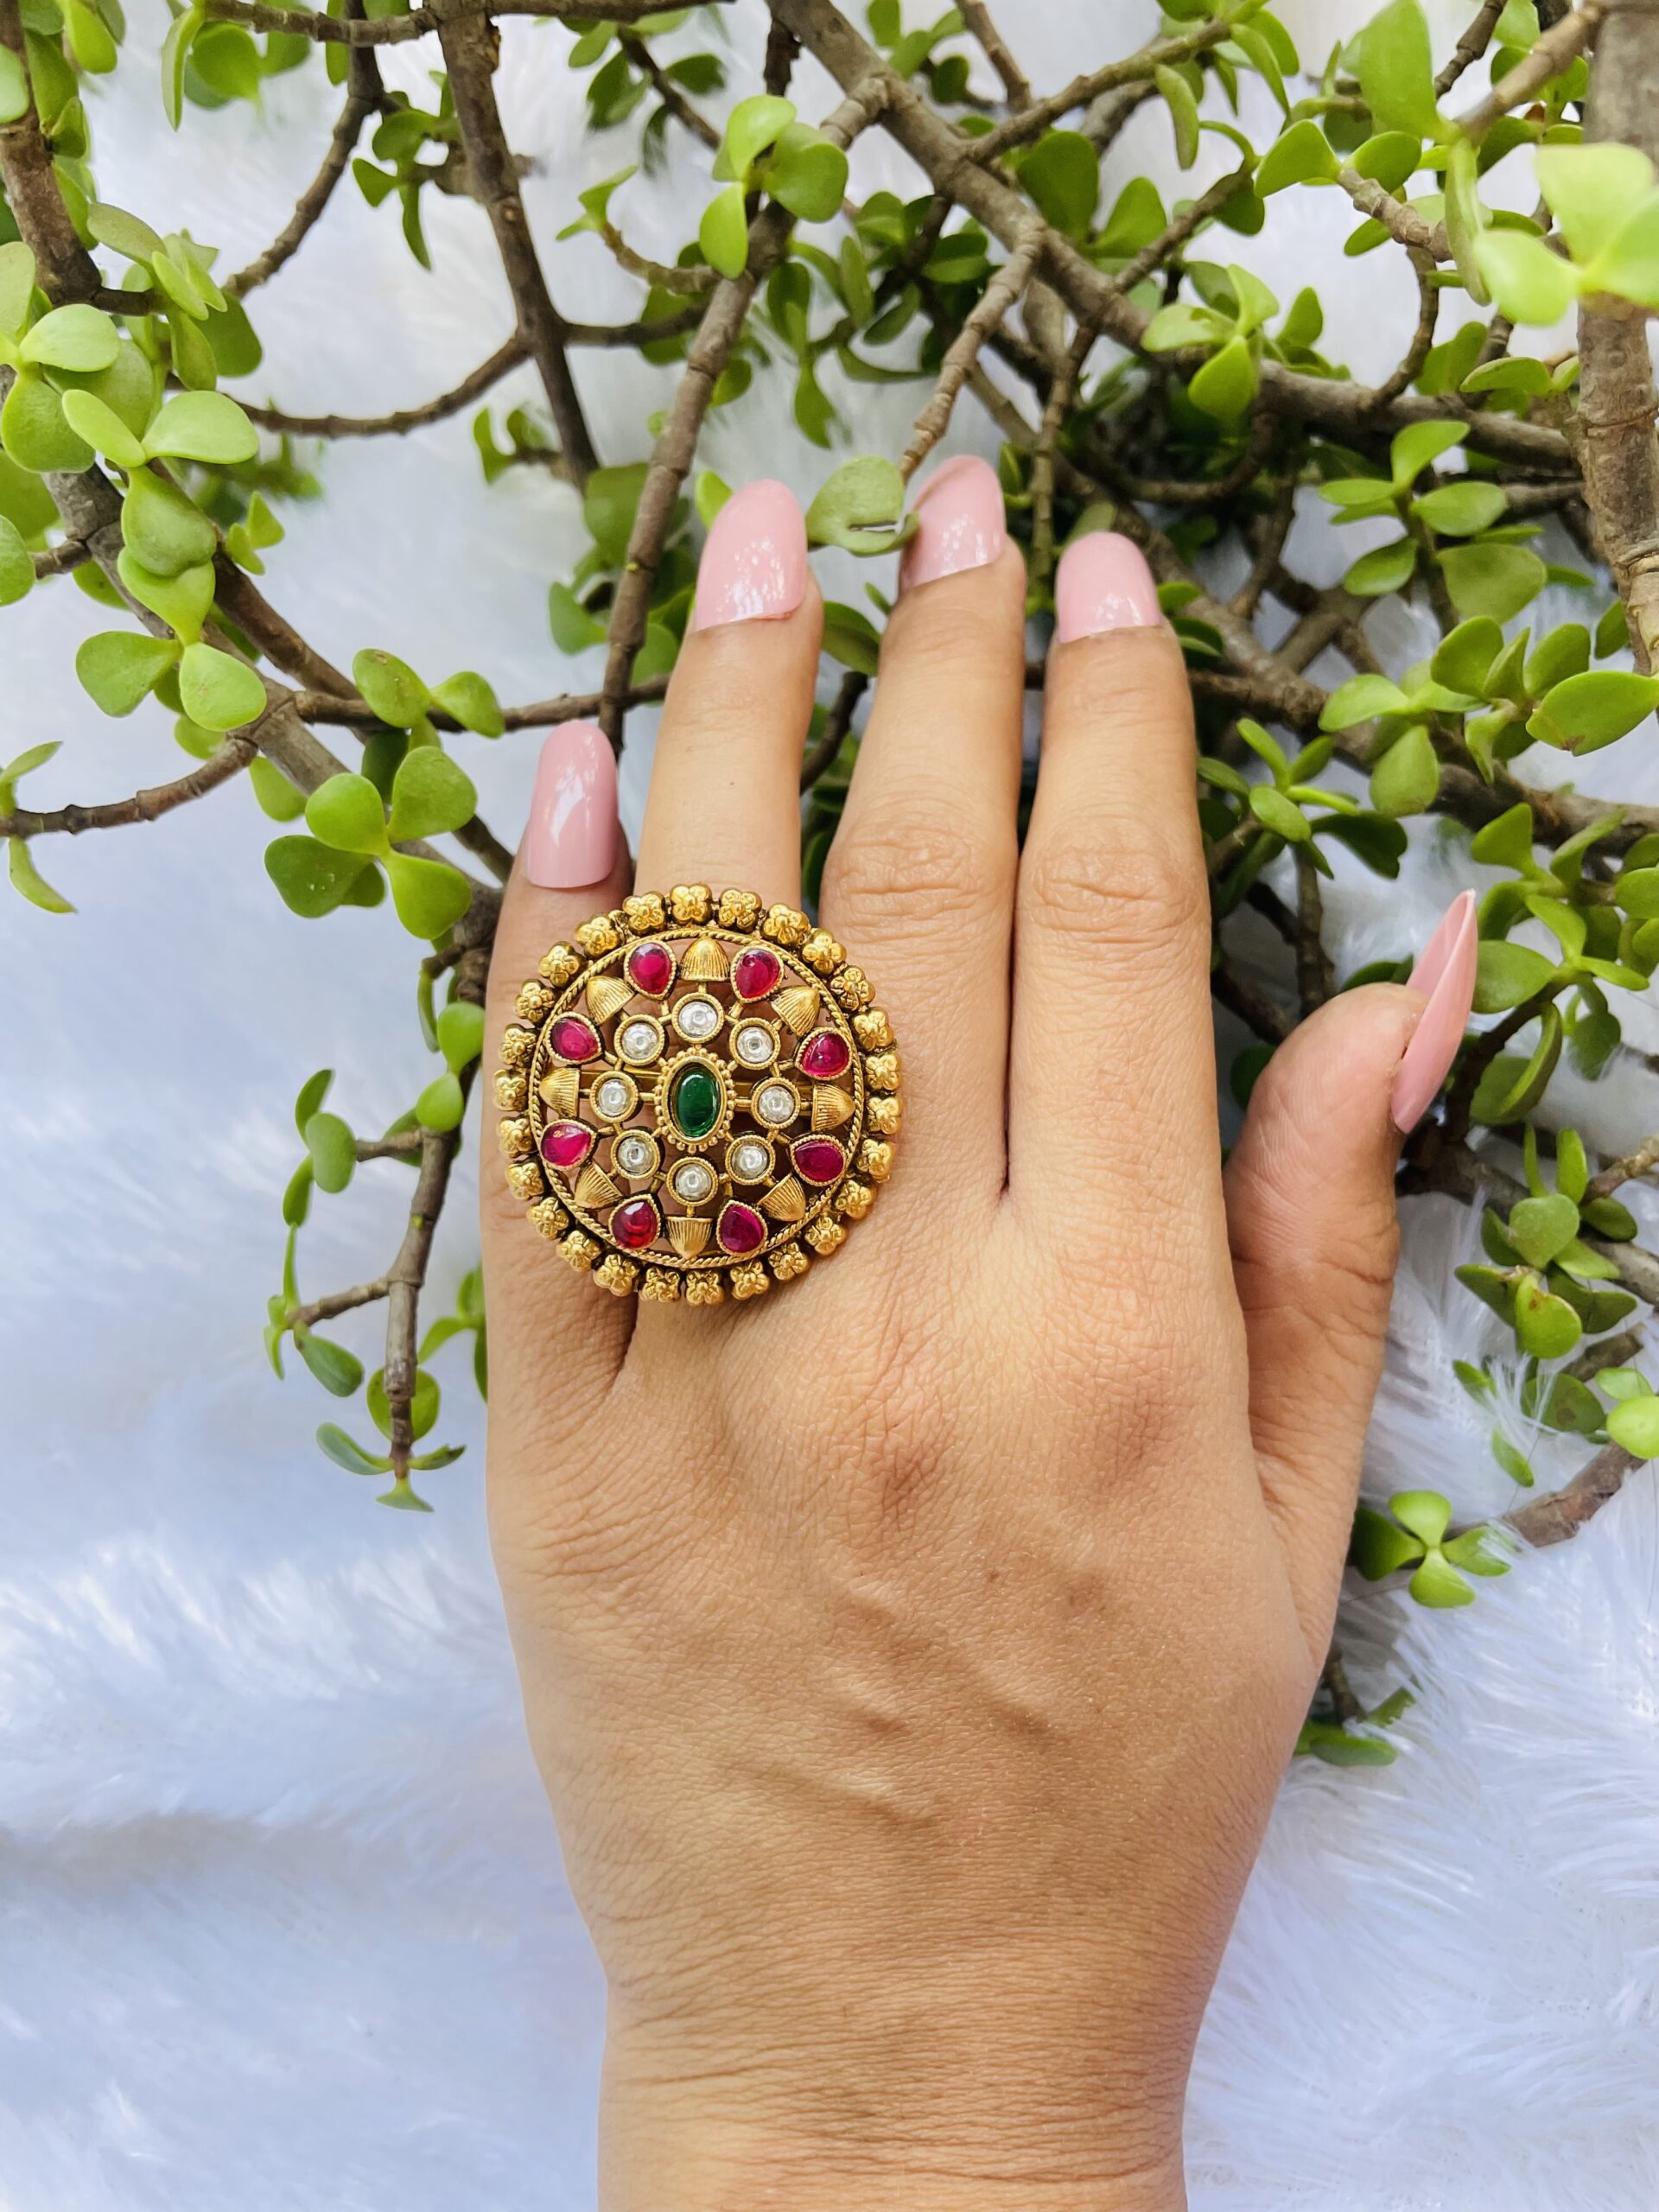 Kemp Stone Finger Ring- Vanki Style Finger Ring, Fashion Stone Ring, नग  वाली अंगूठी - Beeline, Pune | ID: 2851225058373